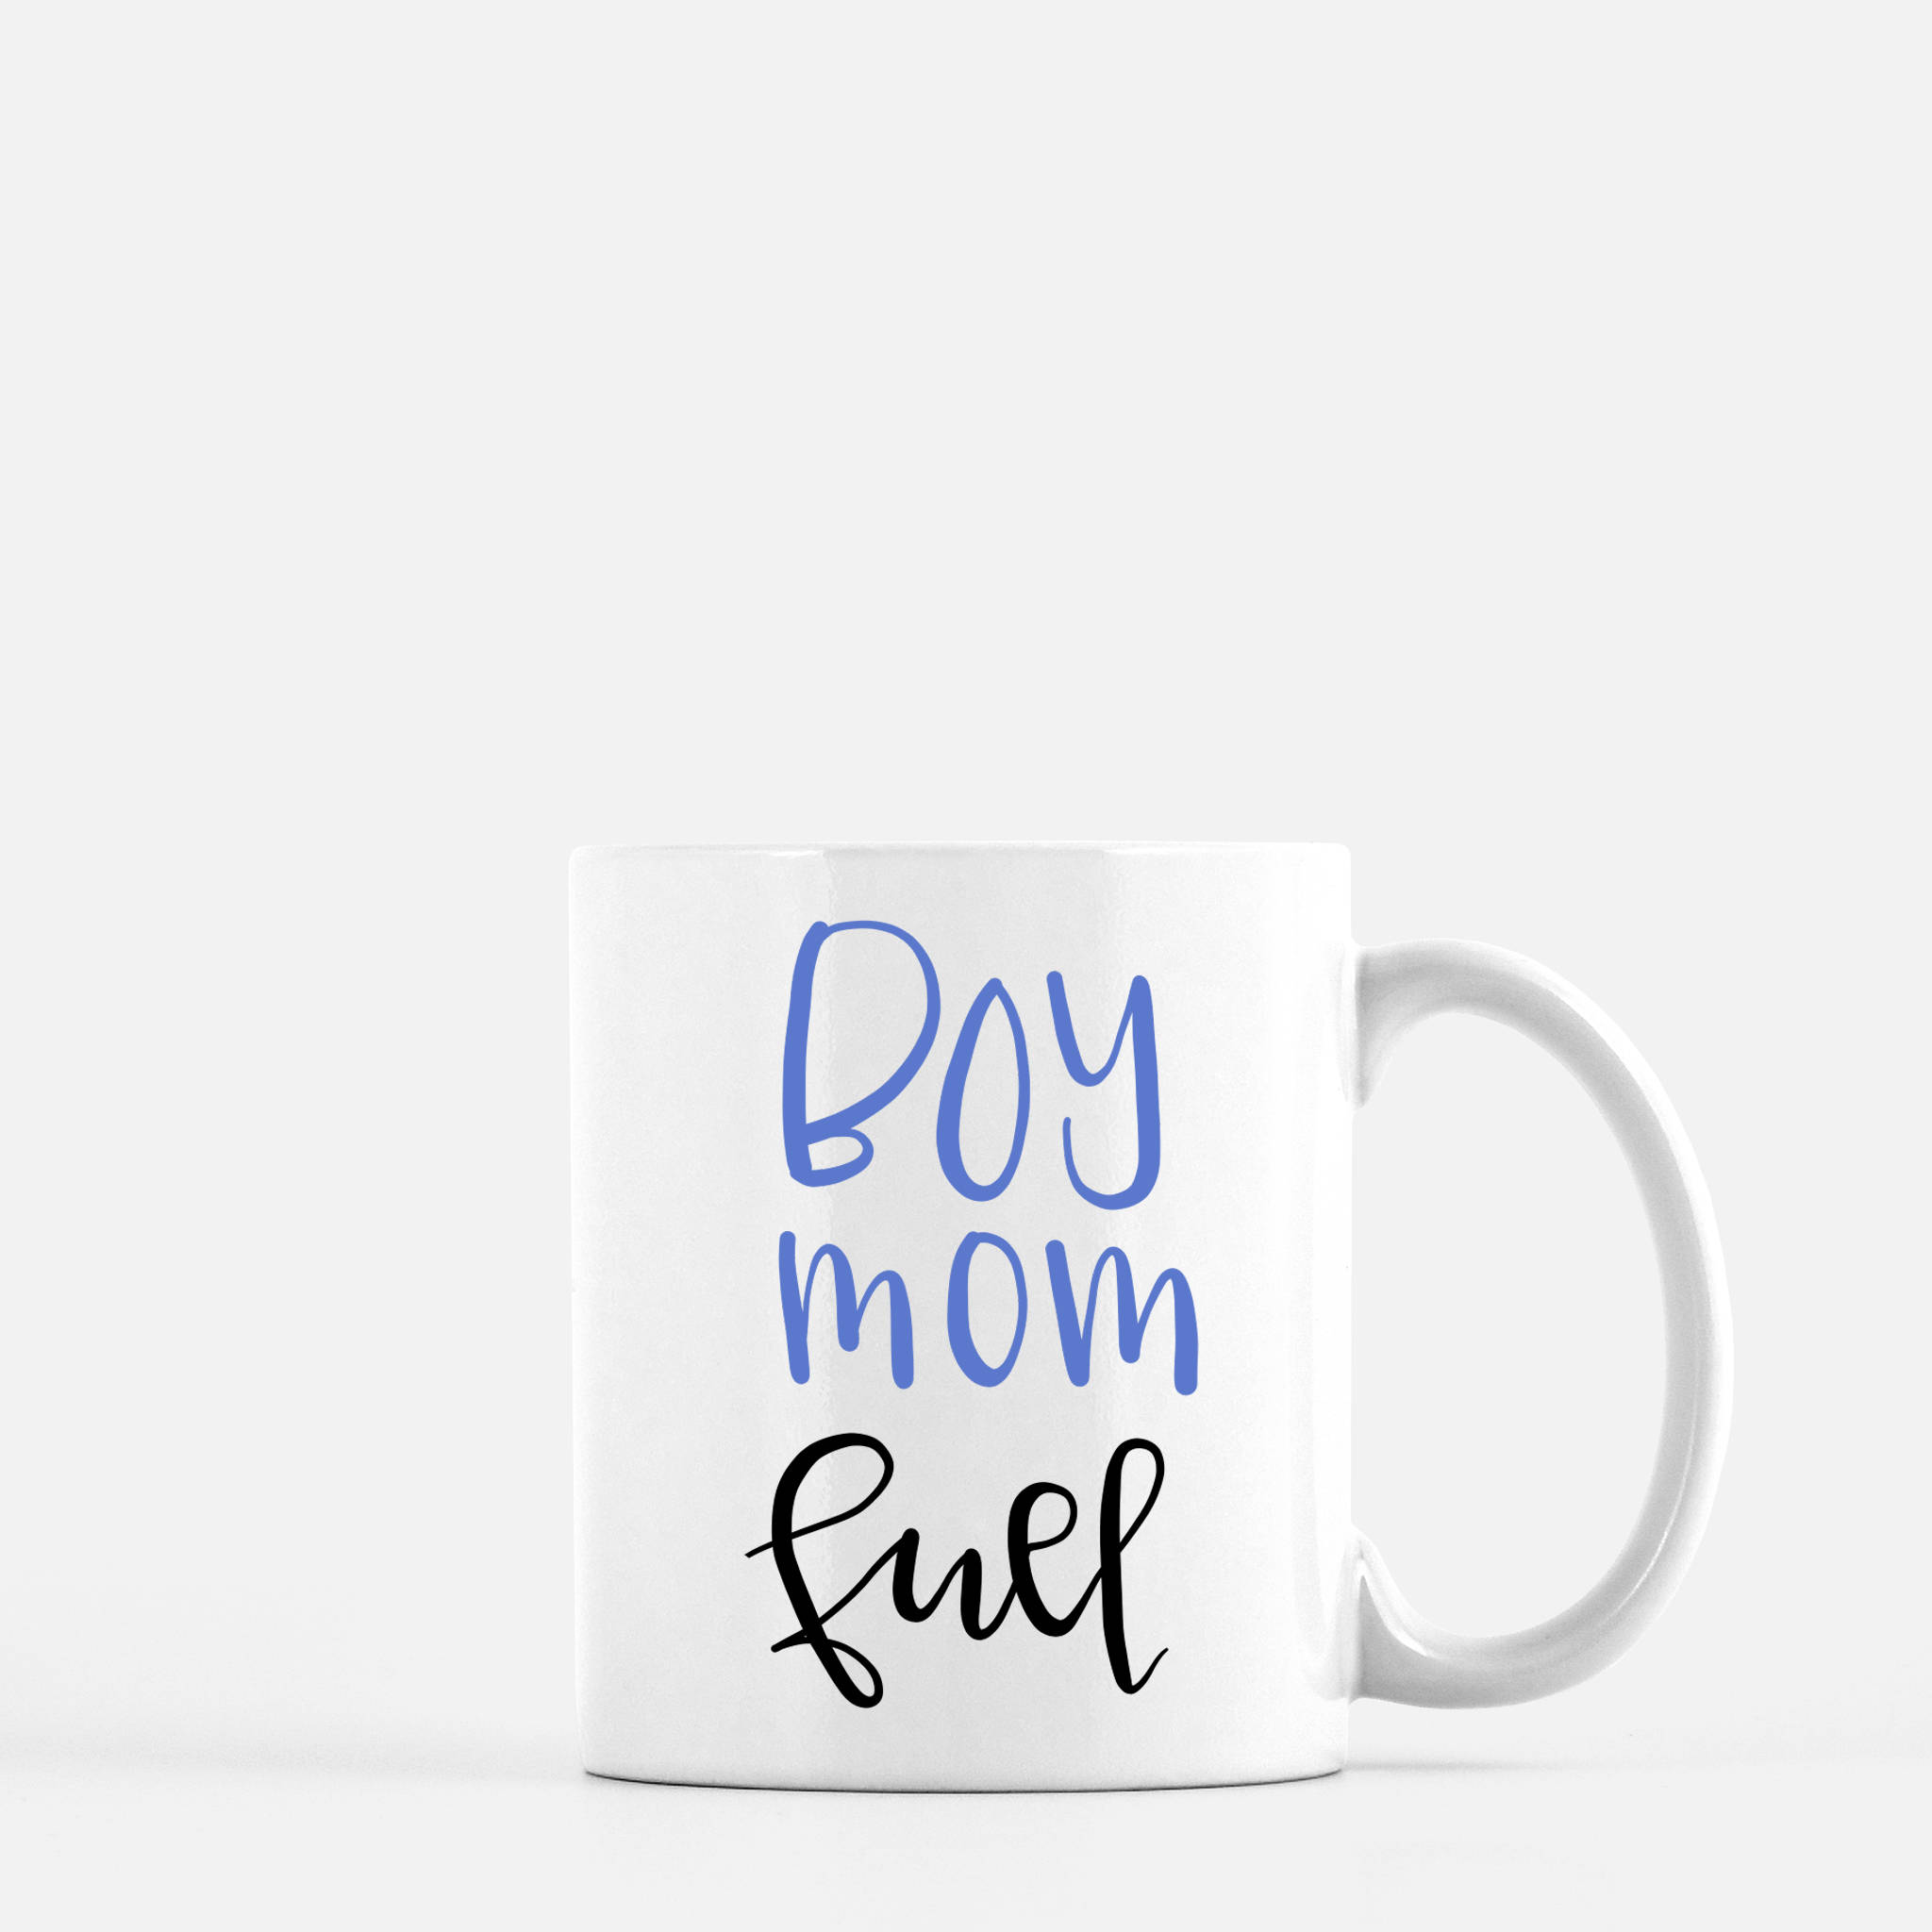 https://twopeasdesigns.com/wp-content/uploads/2018/01/boy-mom-fuel-coffee-mug-5a5fe8dd.jpg